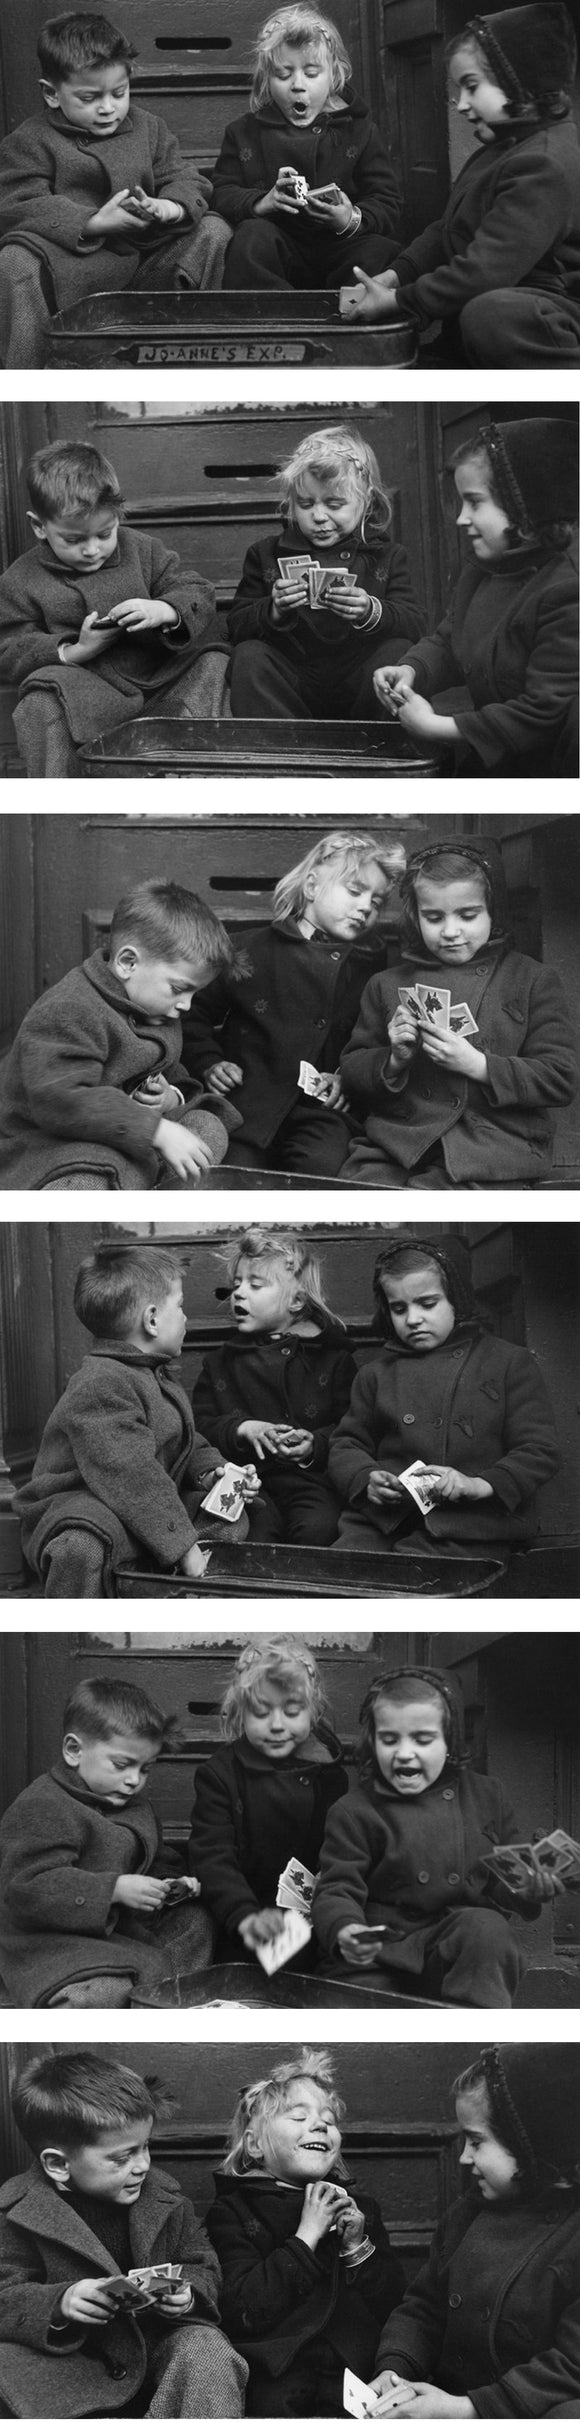 Card Players, New York City, 1947 Photograph (Set of 6) - ImageExchange